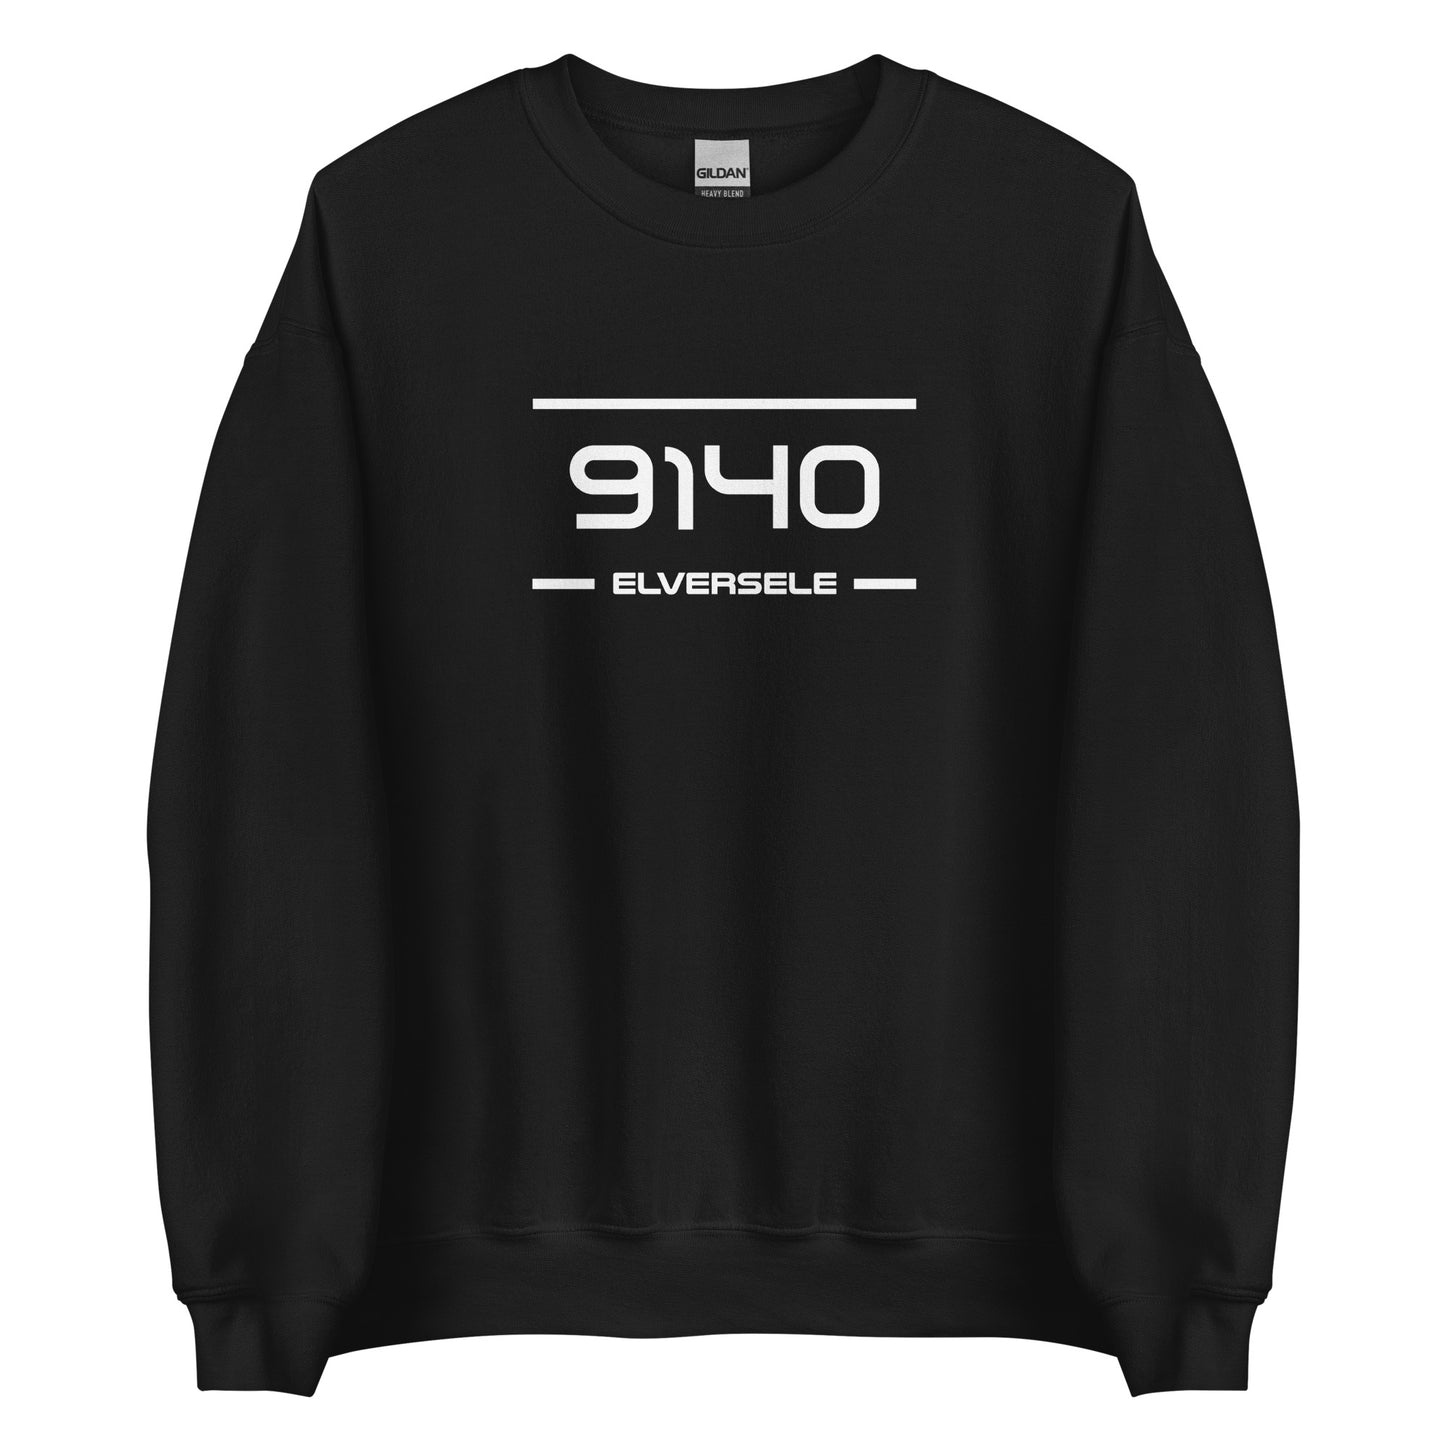 Sweater - 9140 - Elversele (M/V)